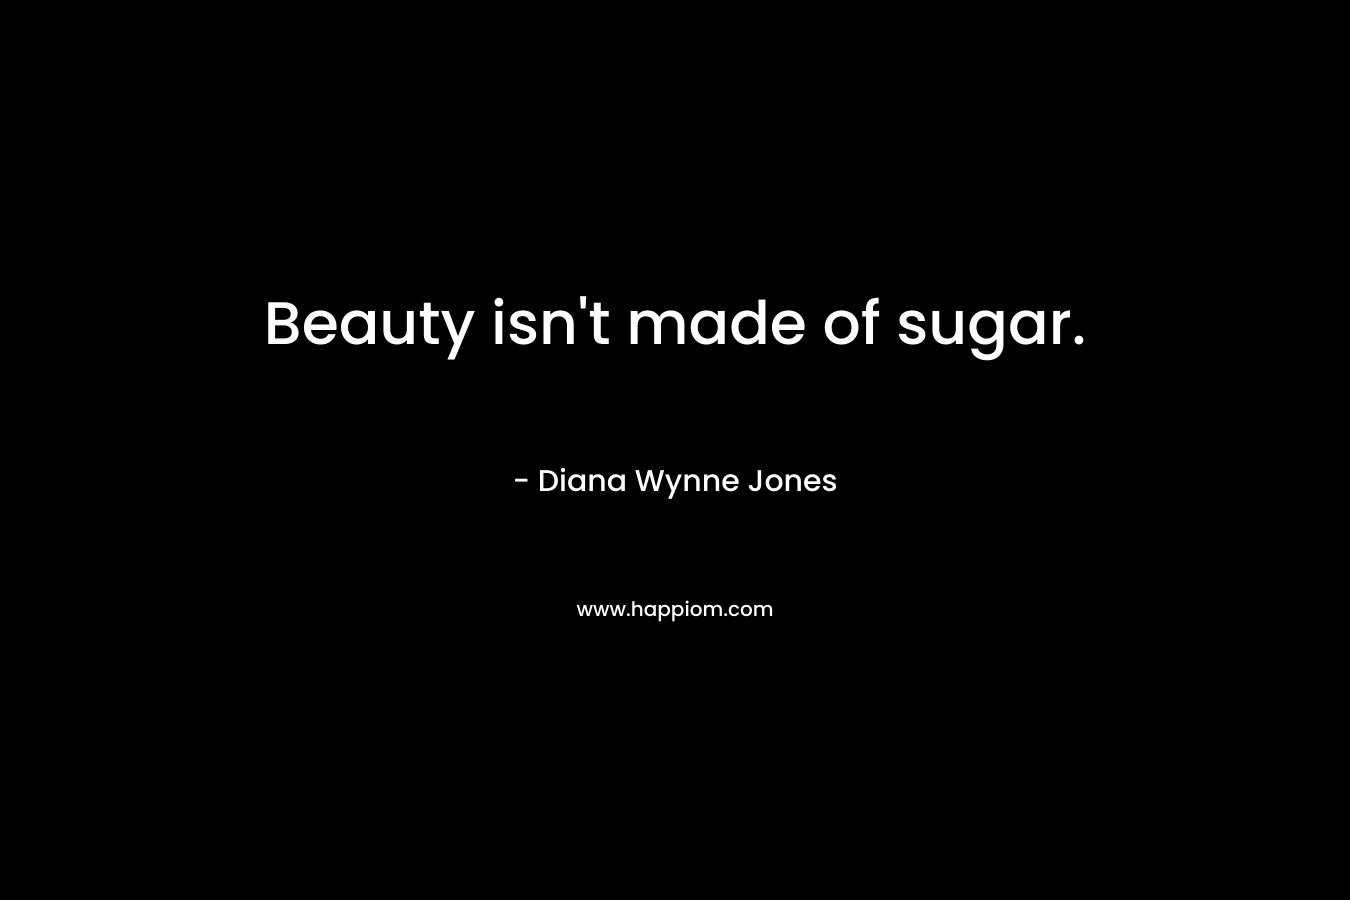 Beauty isn't made of sugar.